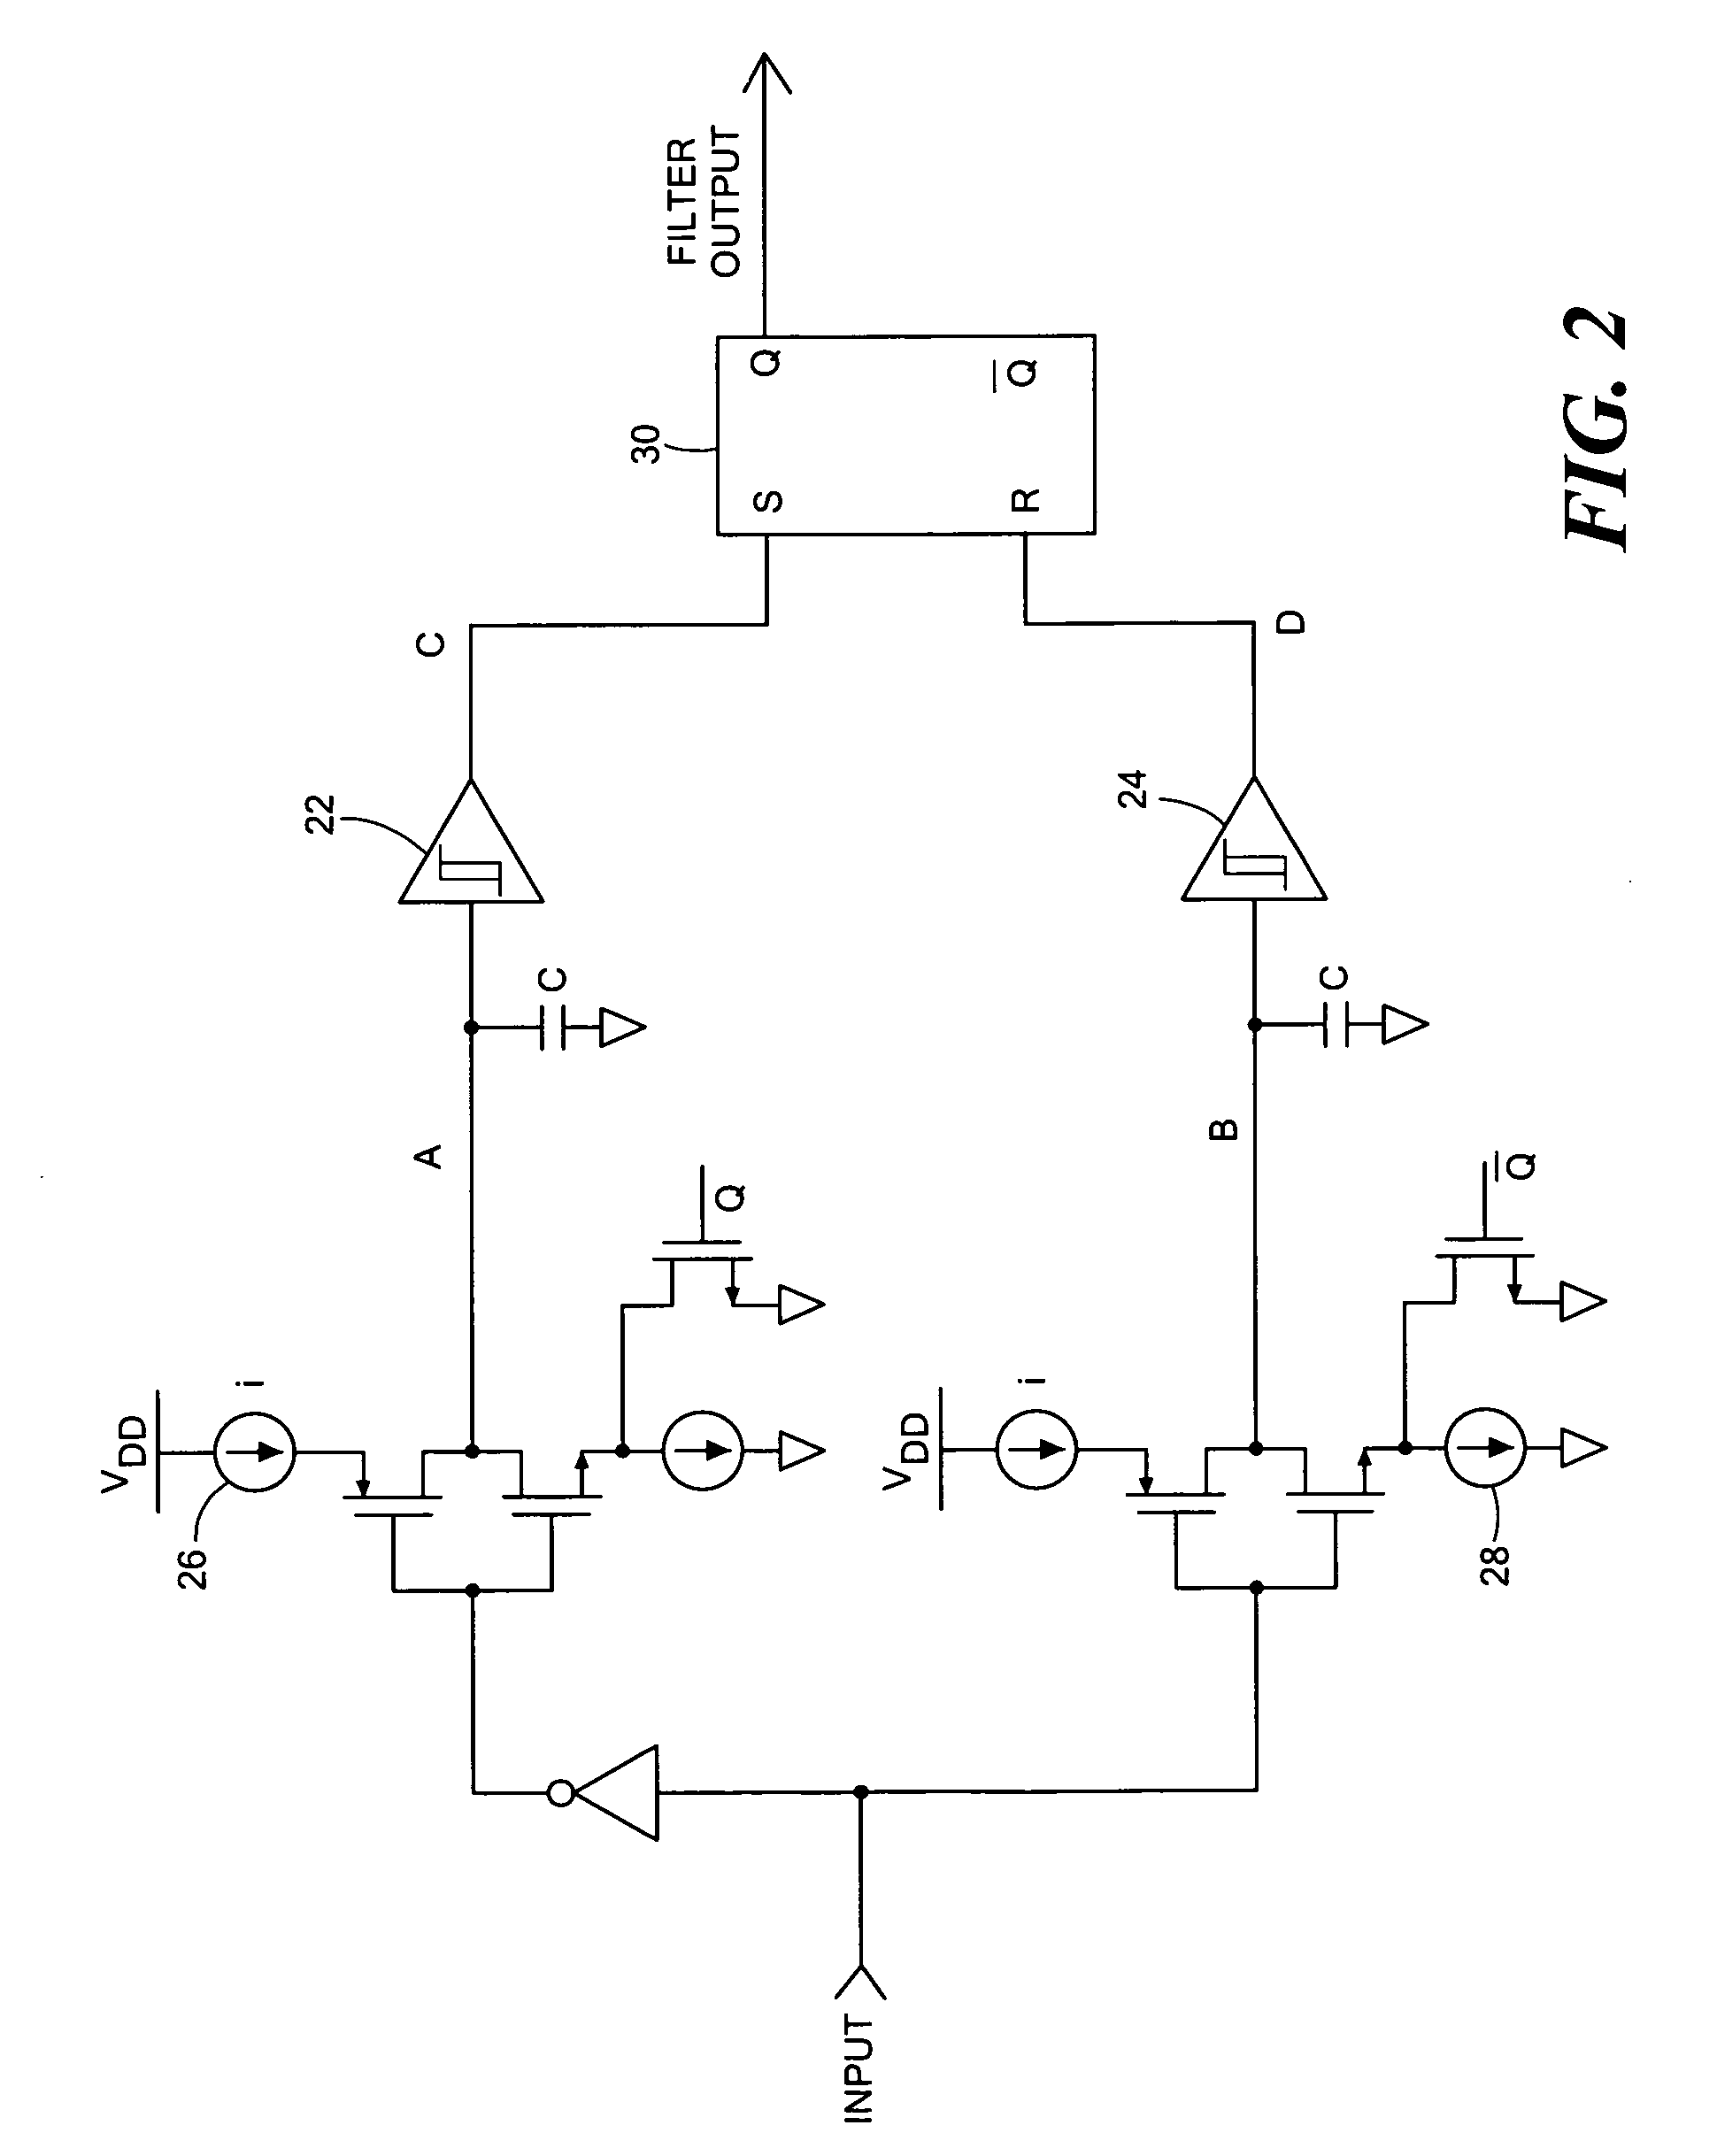 Signal isolator using micro-transformers